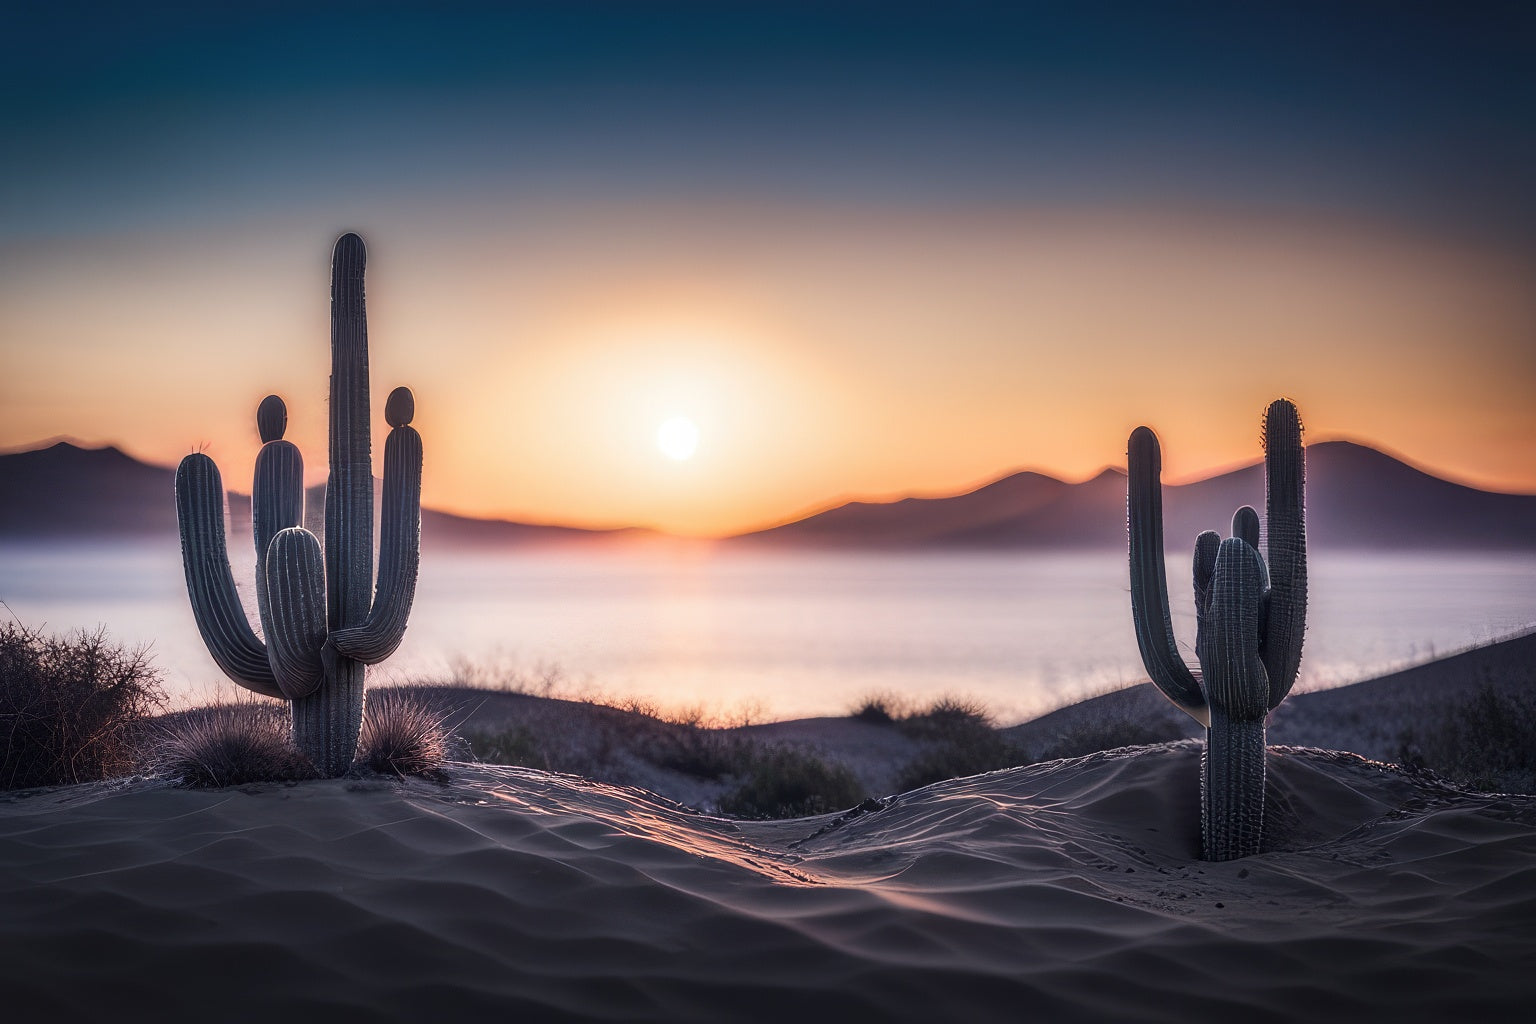 Southwest Cactus at Sunset Photograph Art Print